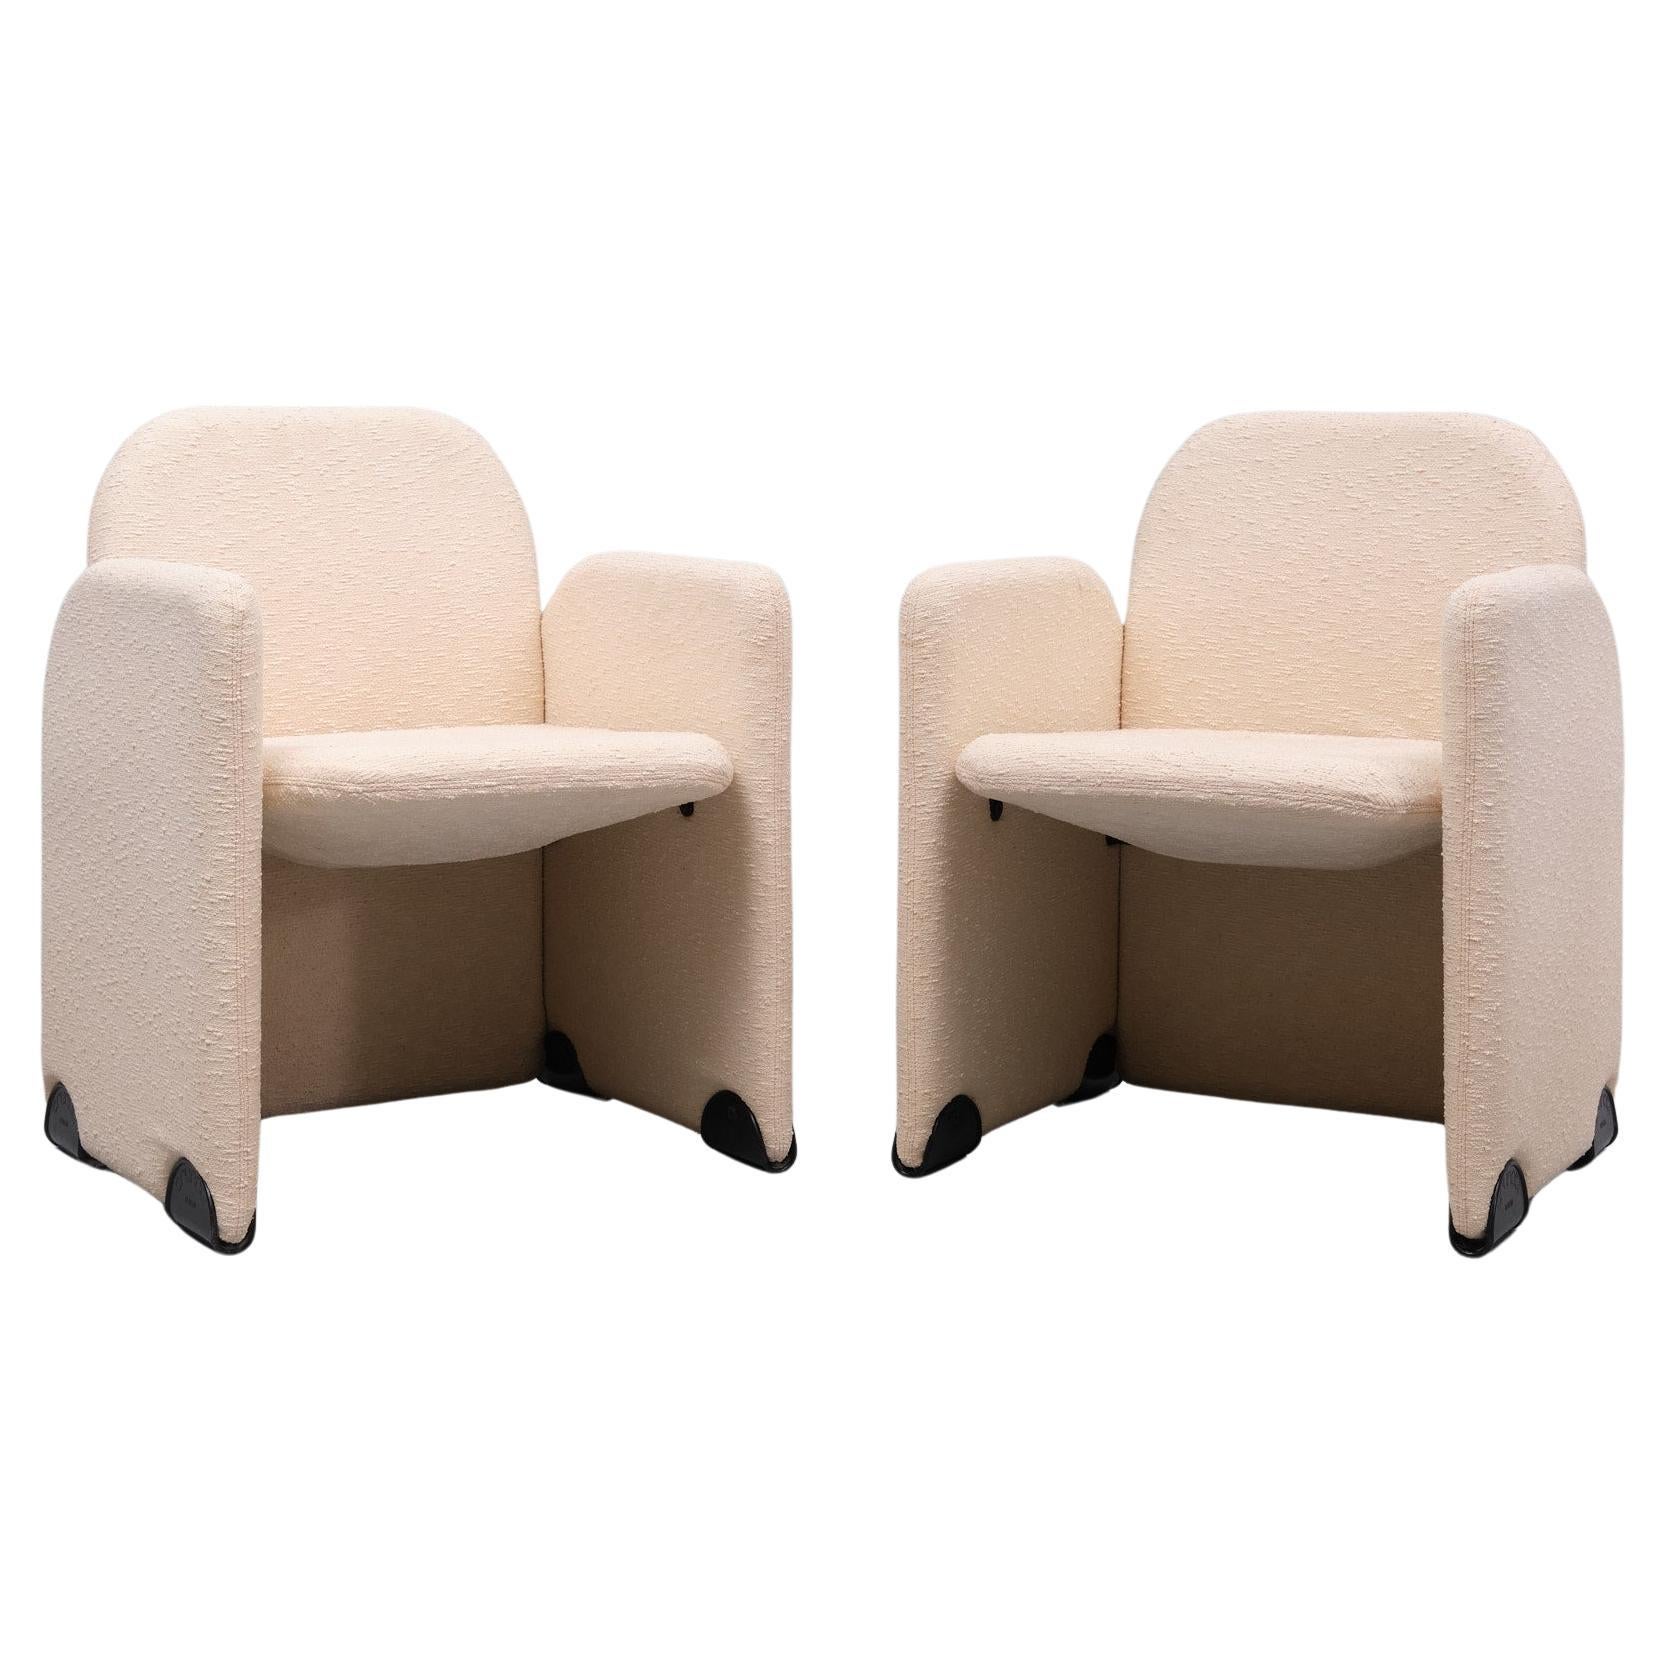 Mid-Century Modern Vintage Italian Lounge Chair s Designed Ammannati & Vitelli for Brunati  1970s  For Sale